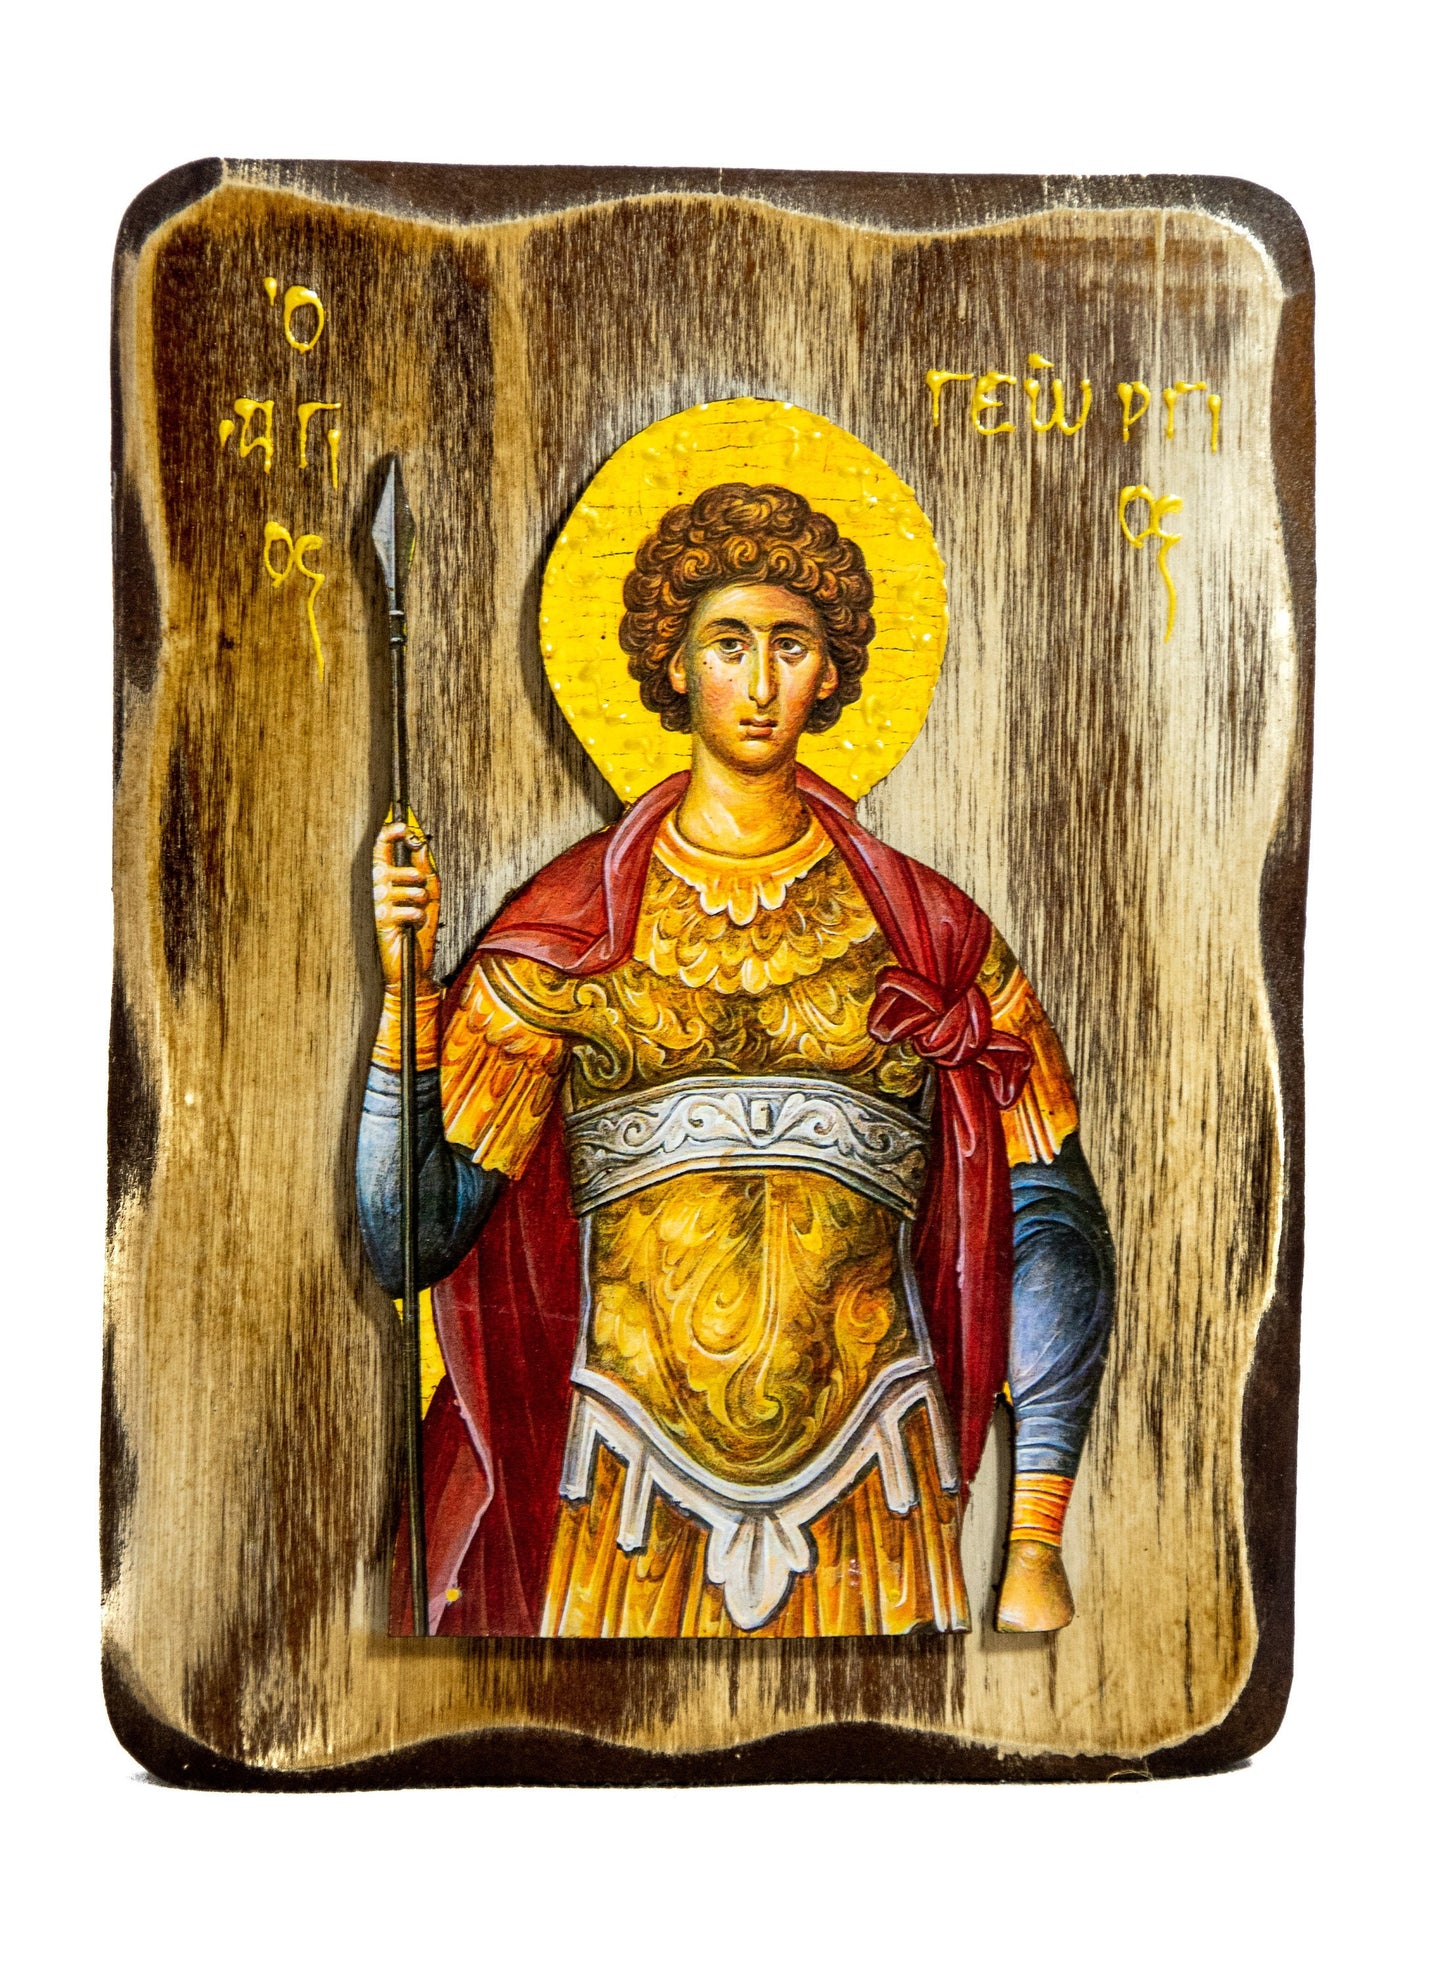 Saint George icon, Handmade Greek Orthodox icon of St George, Byzantine art wall hanging icon on wood plaque Agios Georgios, religious gift TheHolyArt